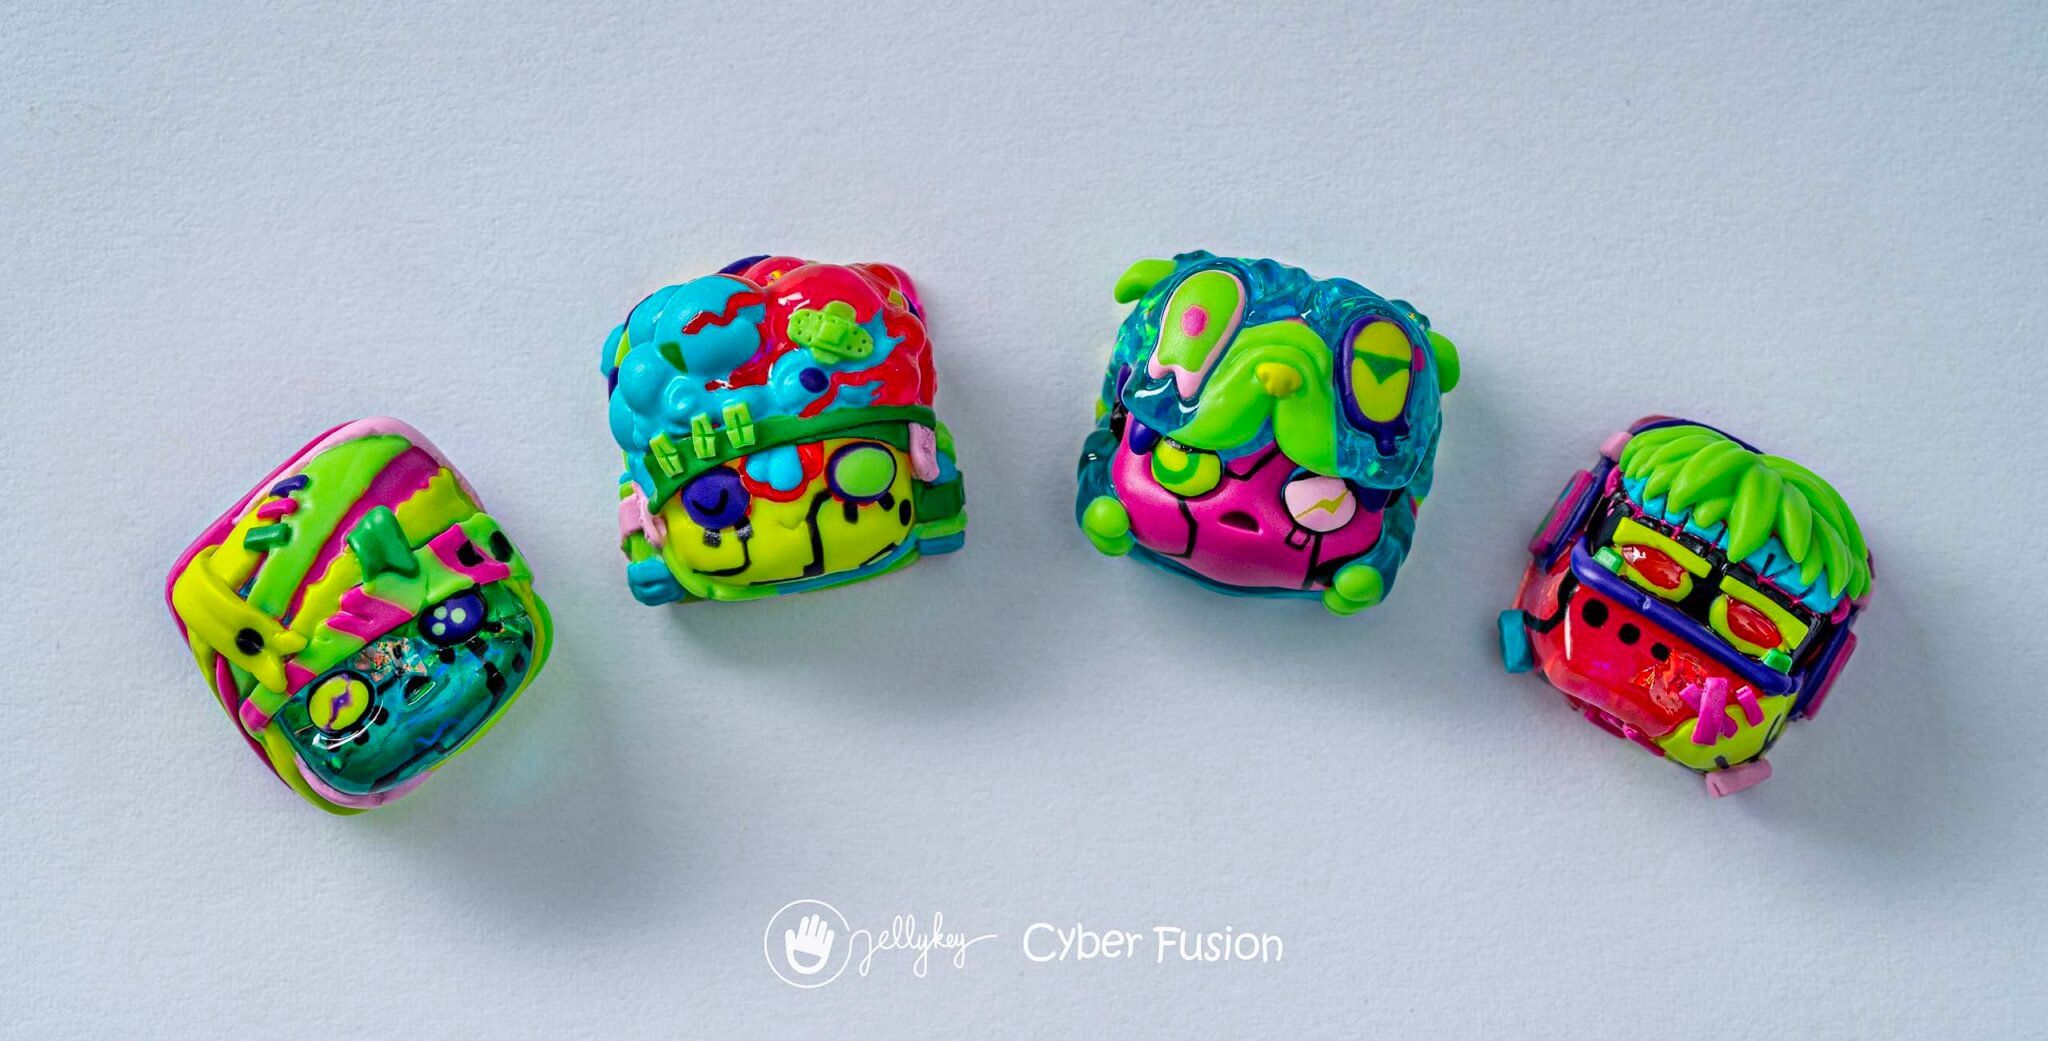 jellykey raffle neon matrix customs keycaps 16